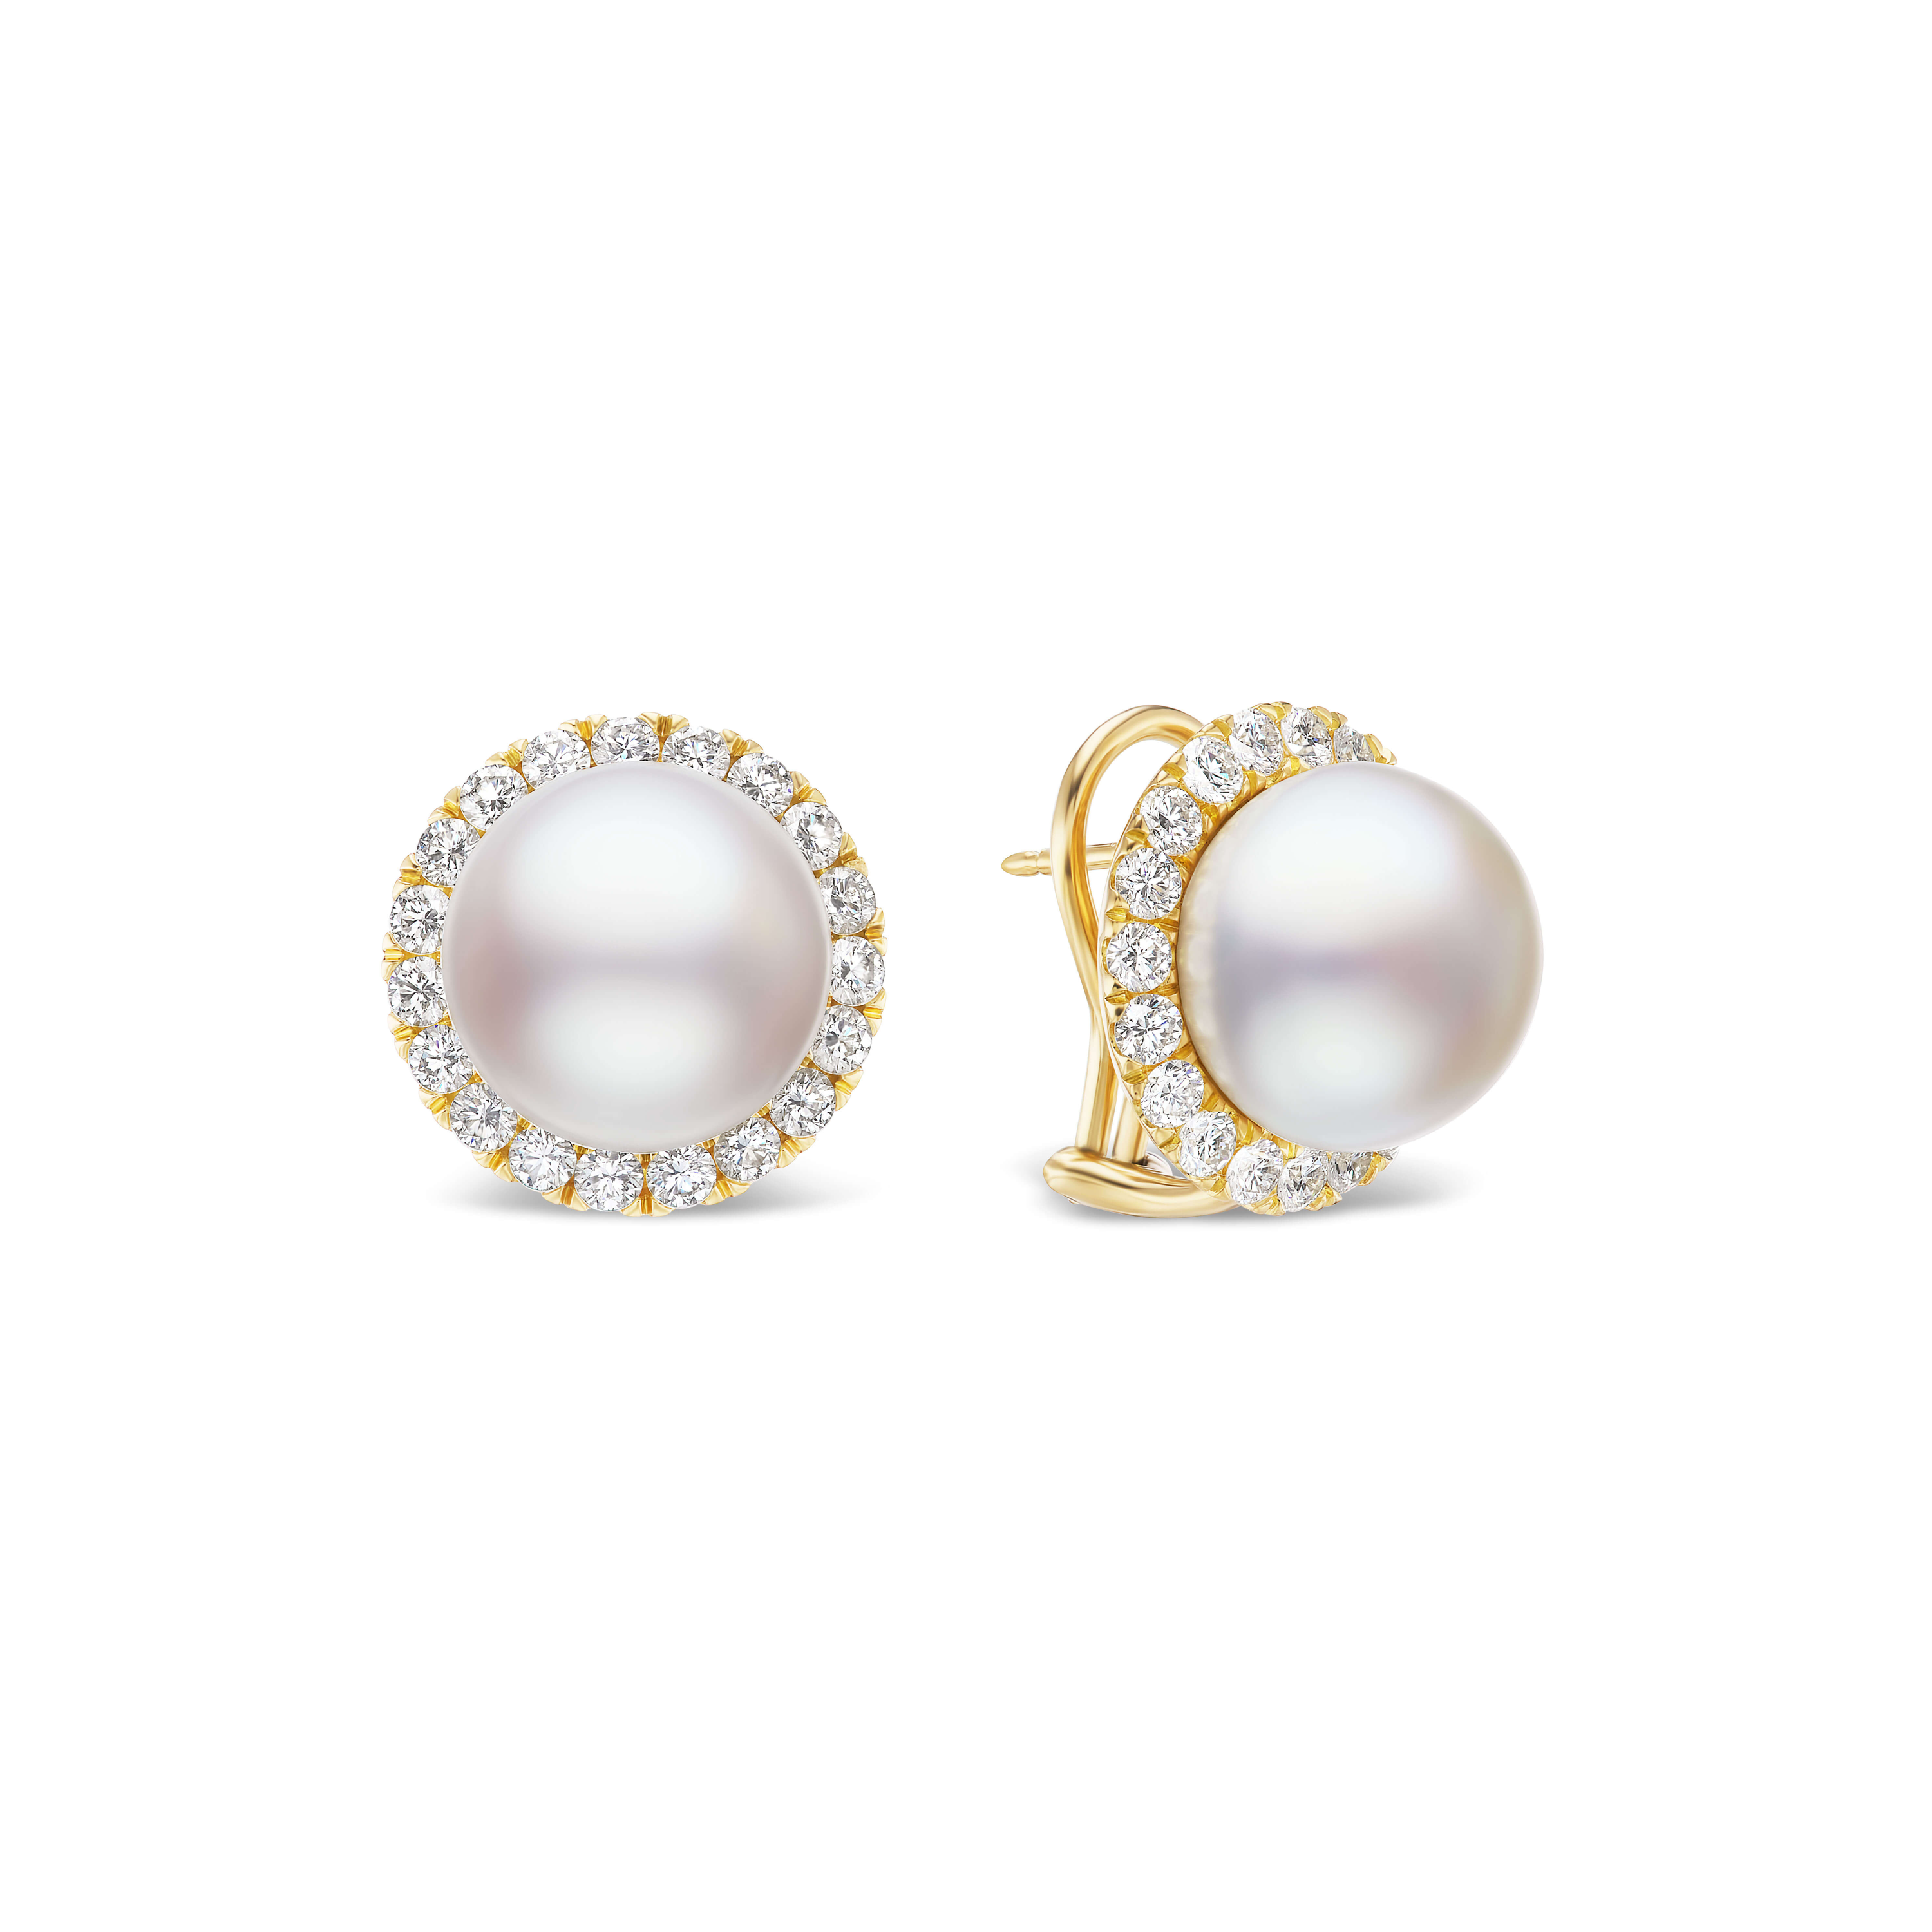 pearl and diamond wedding jewelry earrings